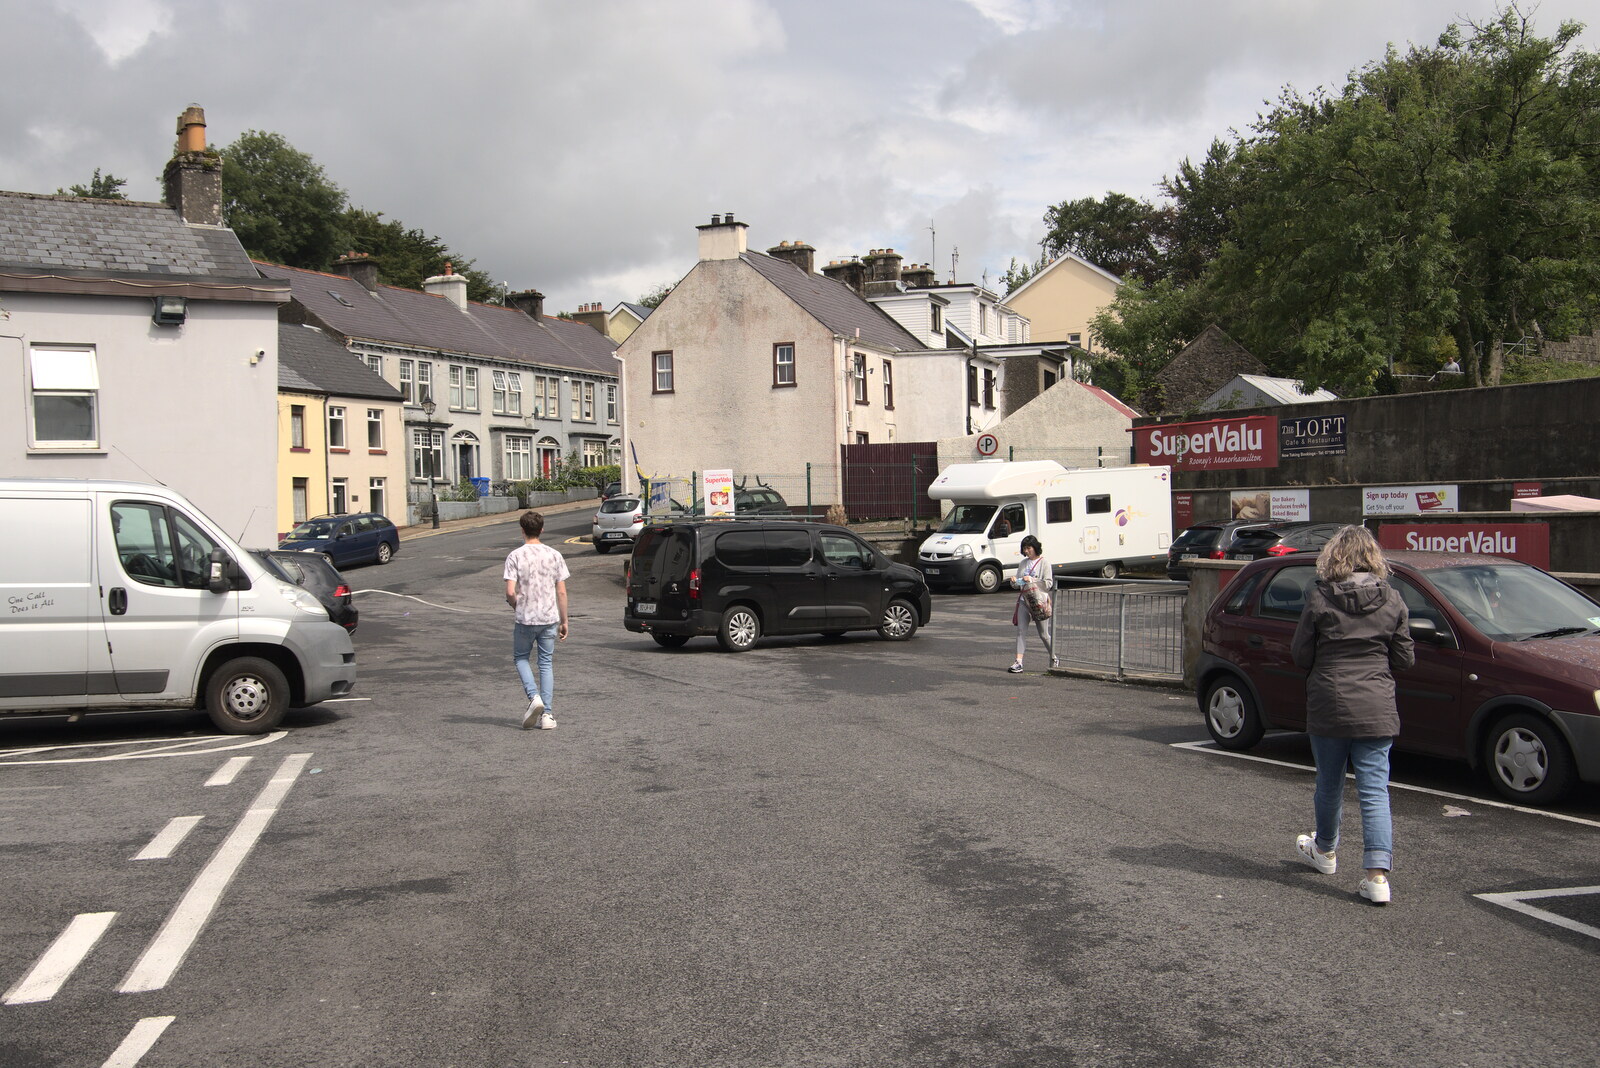 Pints of Guinness and Streedagh Beach, Grange and Sligo, Ireland - 9th August 2021: The SuperValu car park